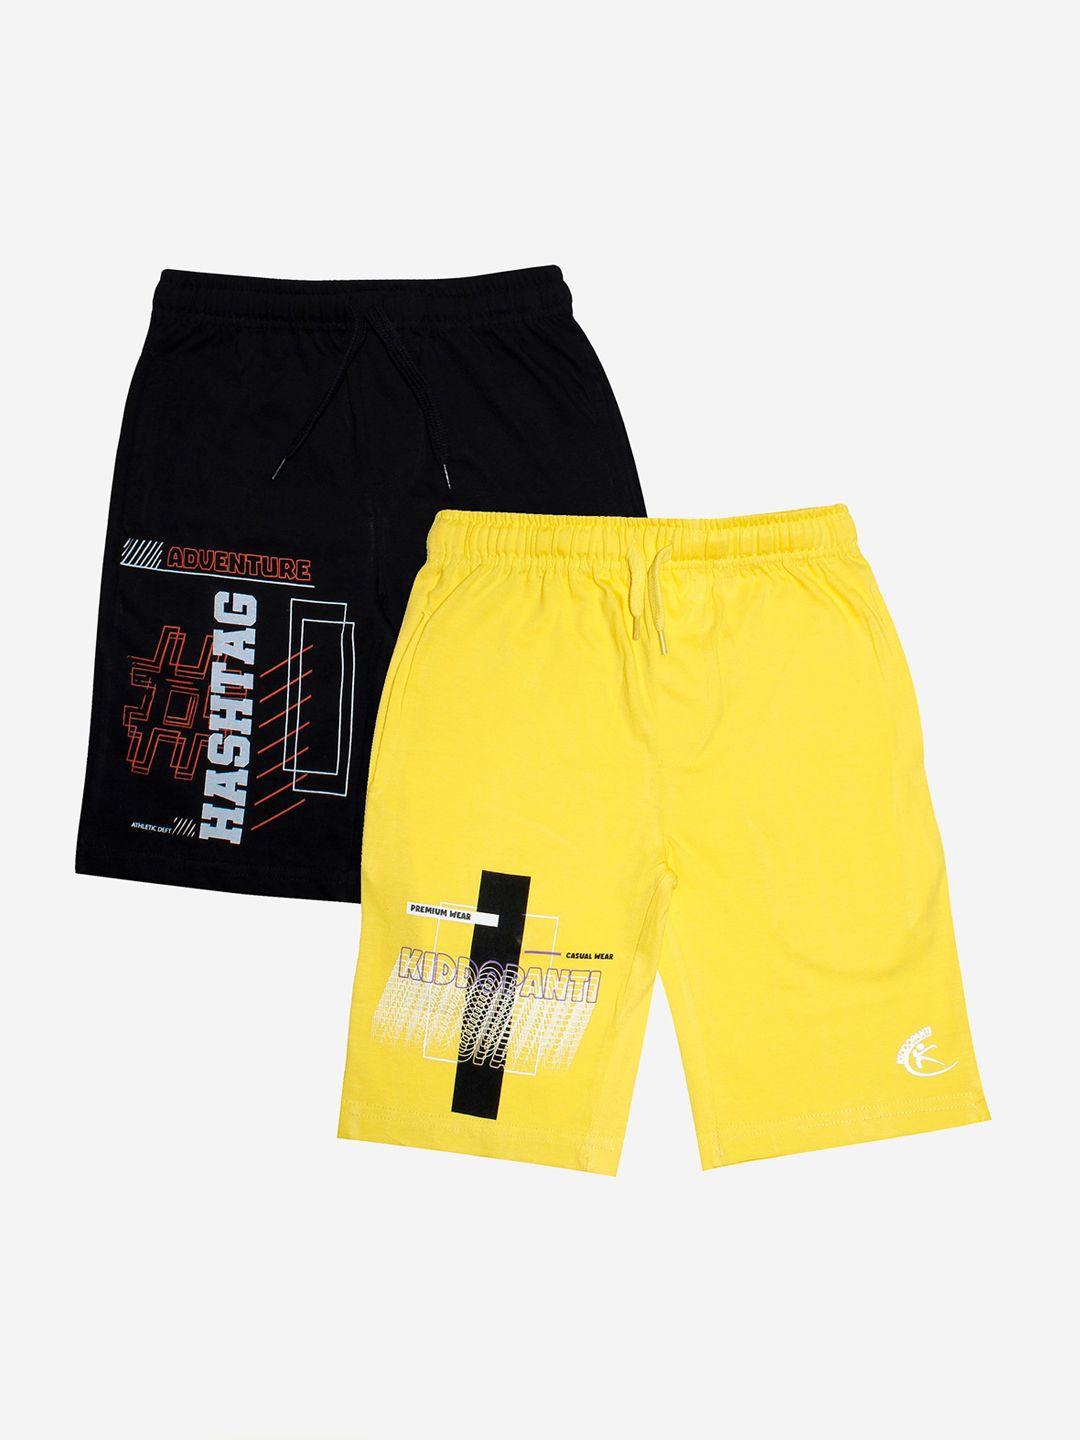 kiddopanti-boys-pck-of-2-black-&-yellow-printed-sports-shorts